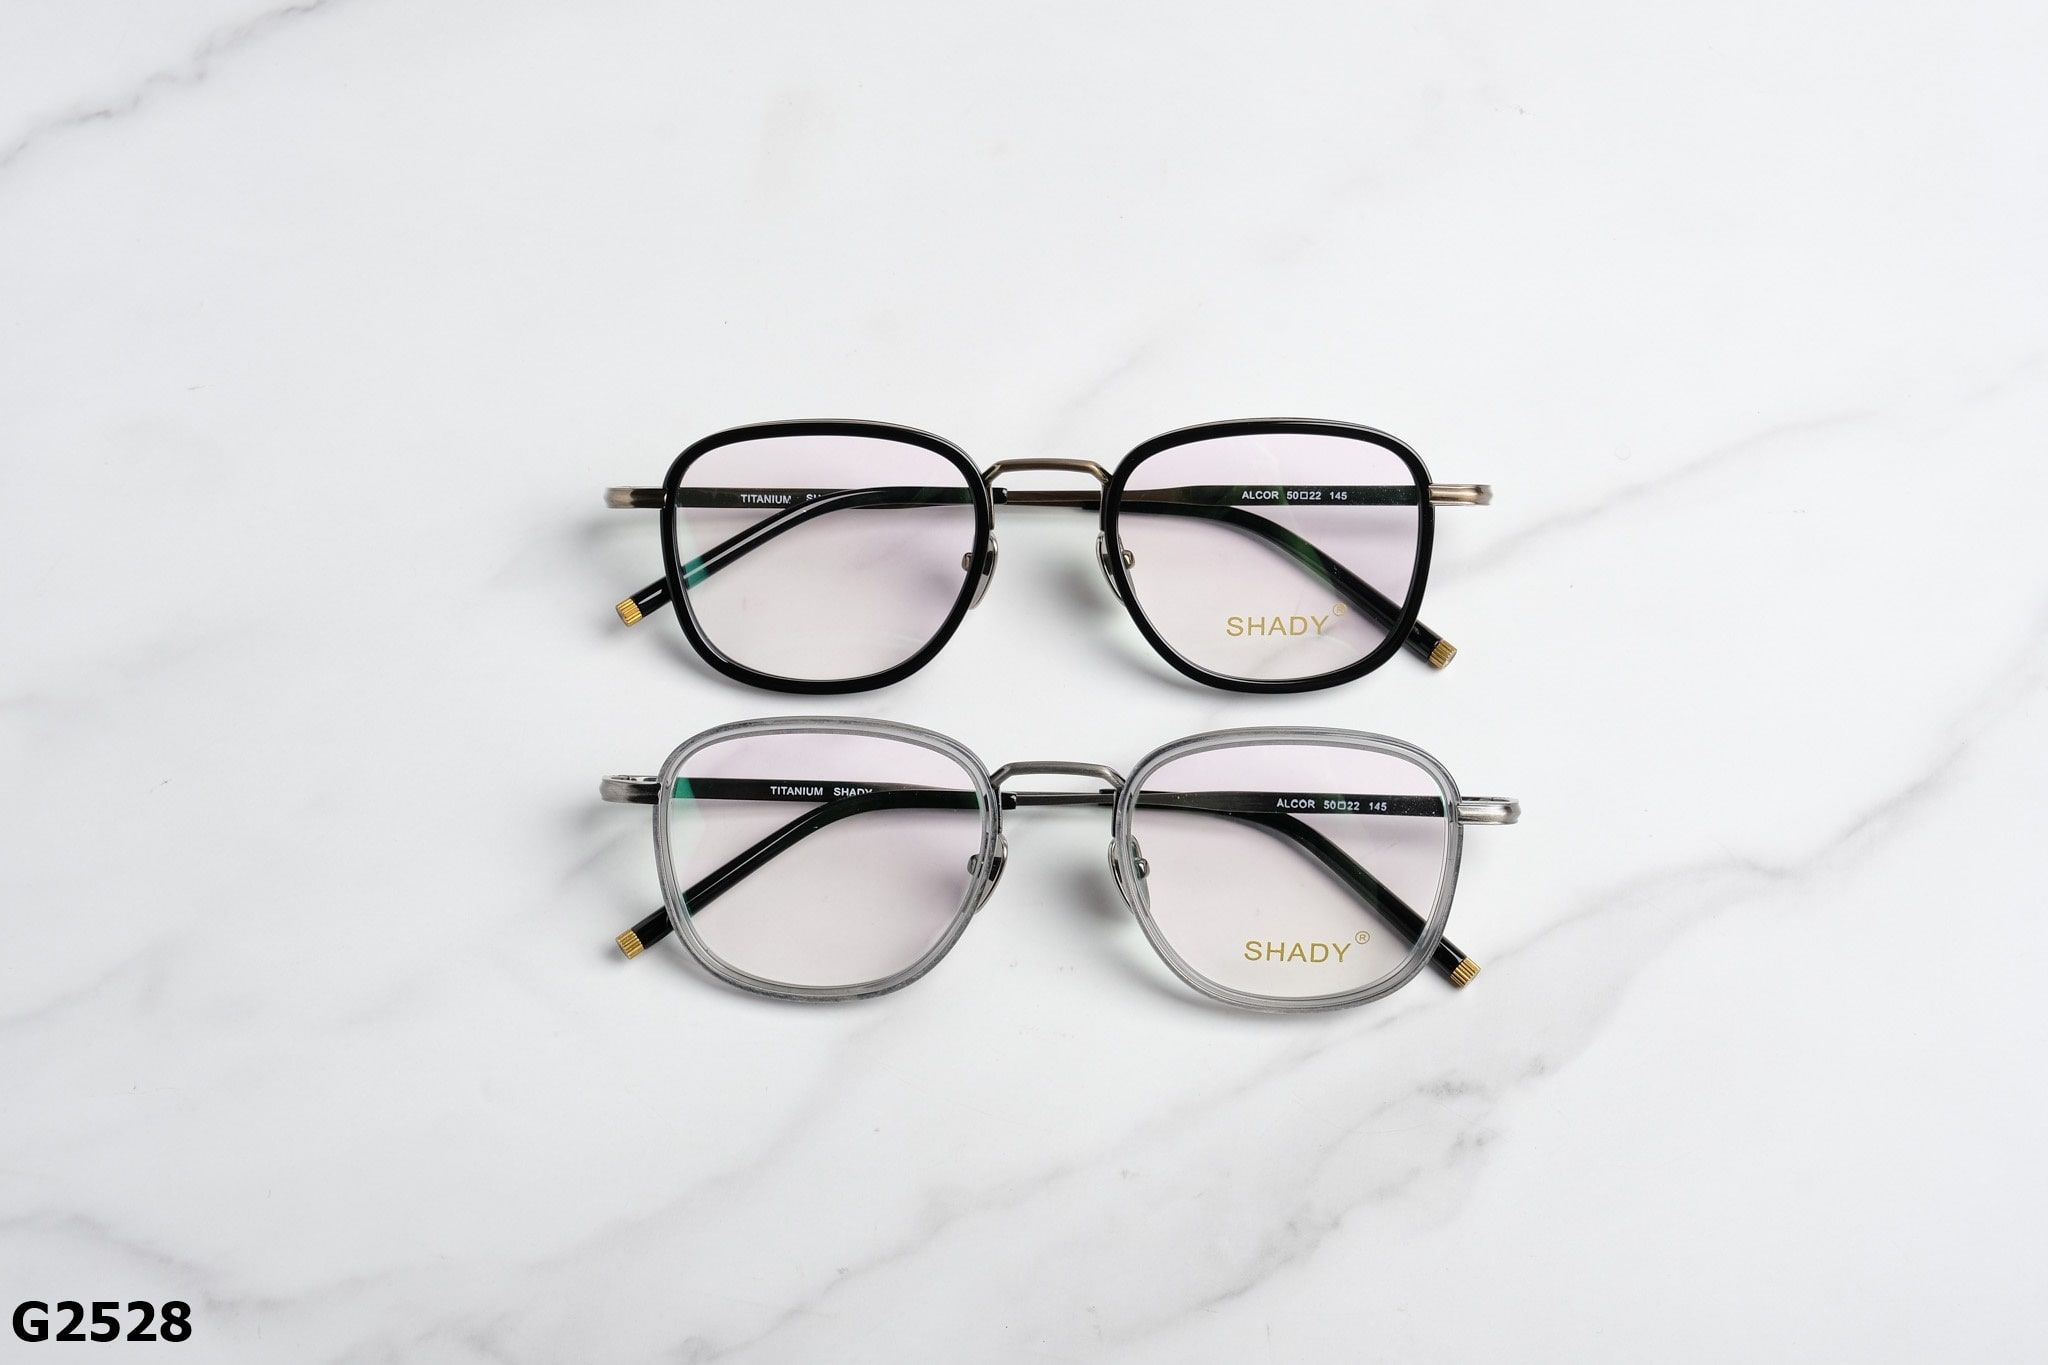  SHADY Eyewear - Glasses - G2528 